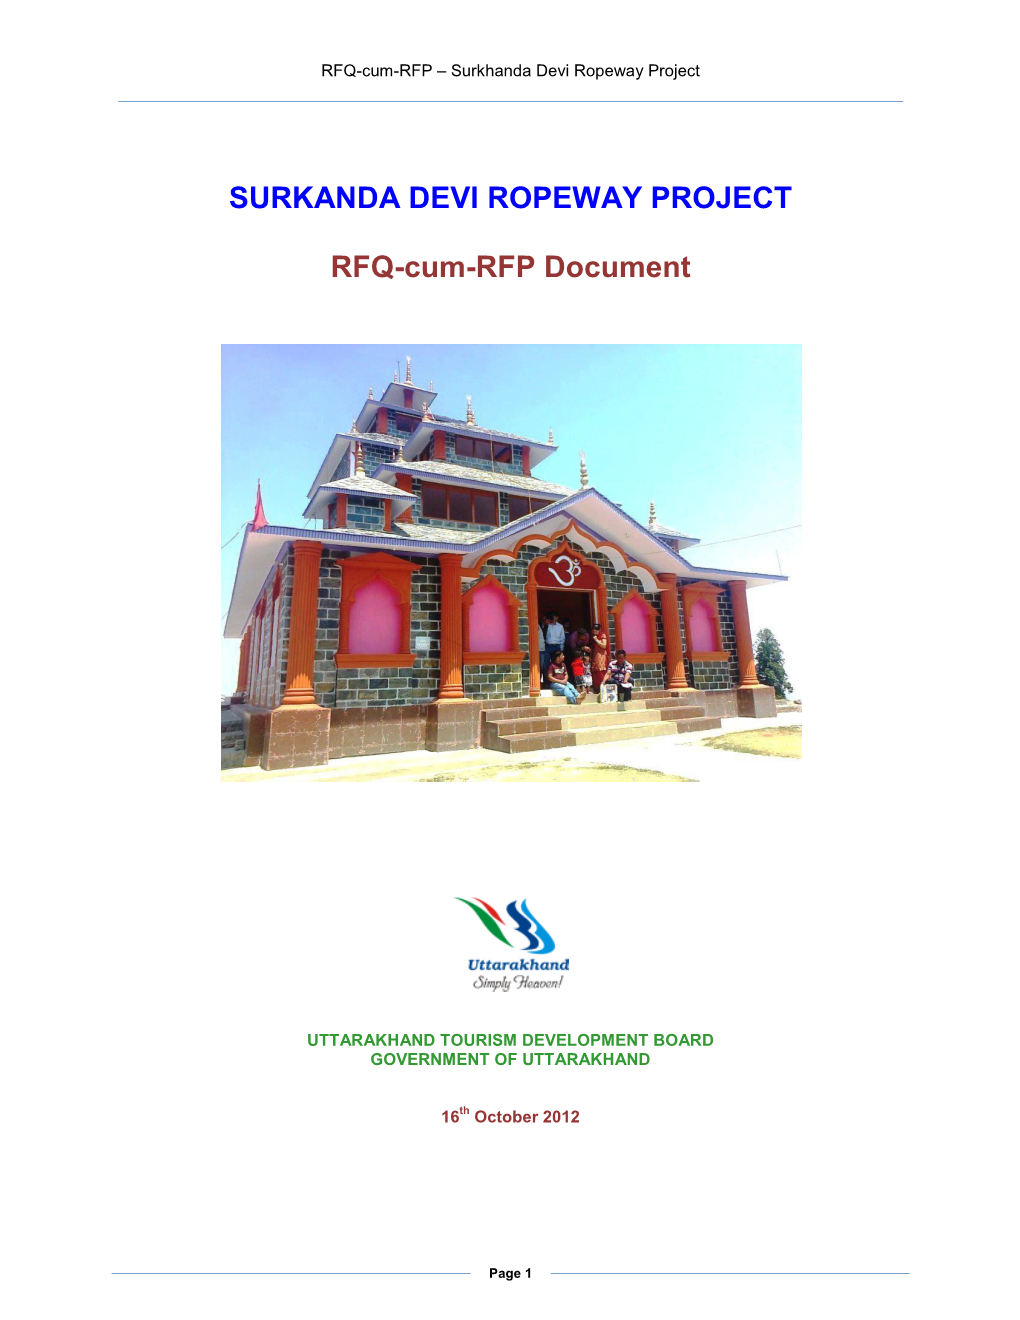 RFQ-Cum-RFP – Surkhanda Devi Ropeway Project